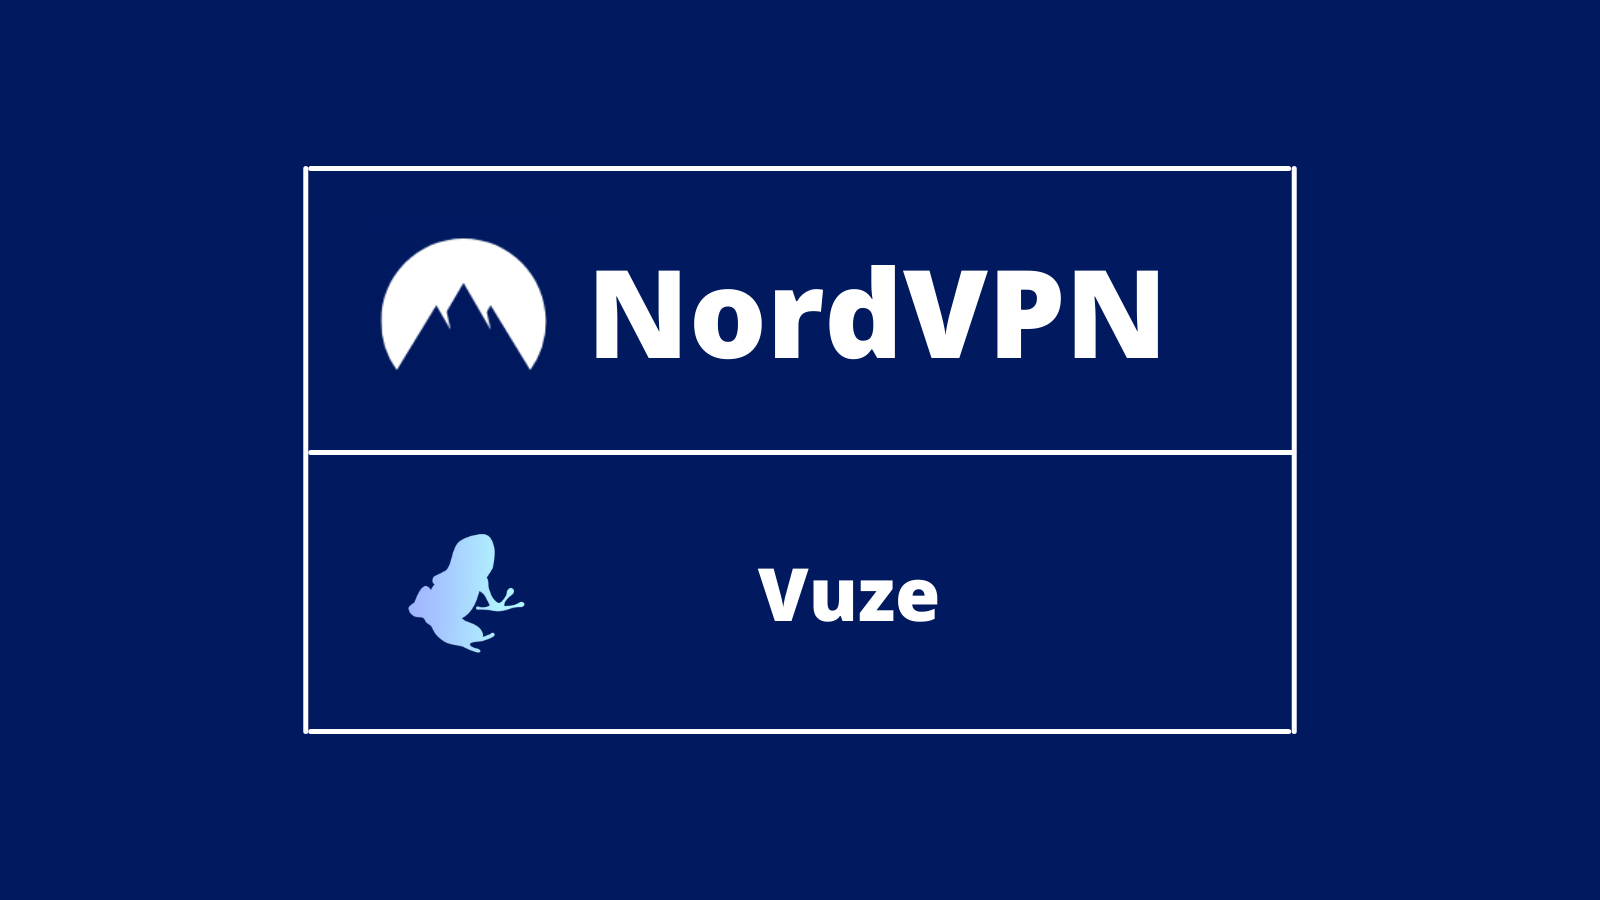 vuze only download on nordvpn